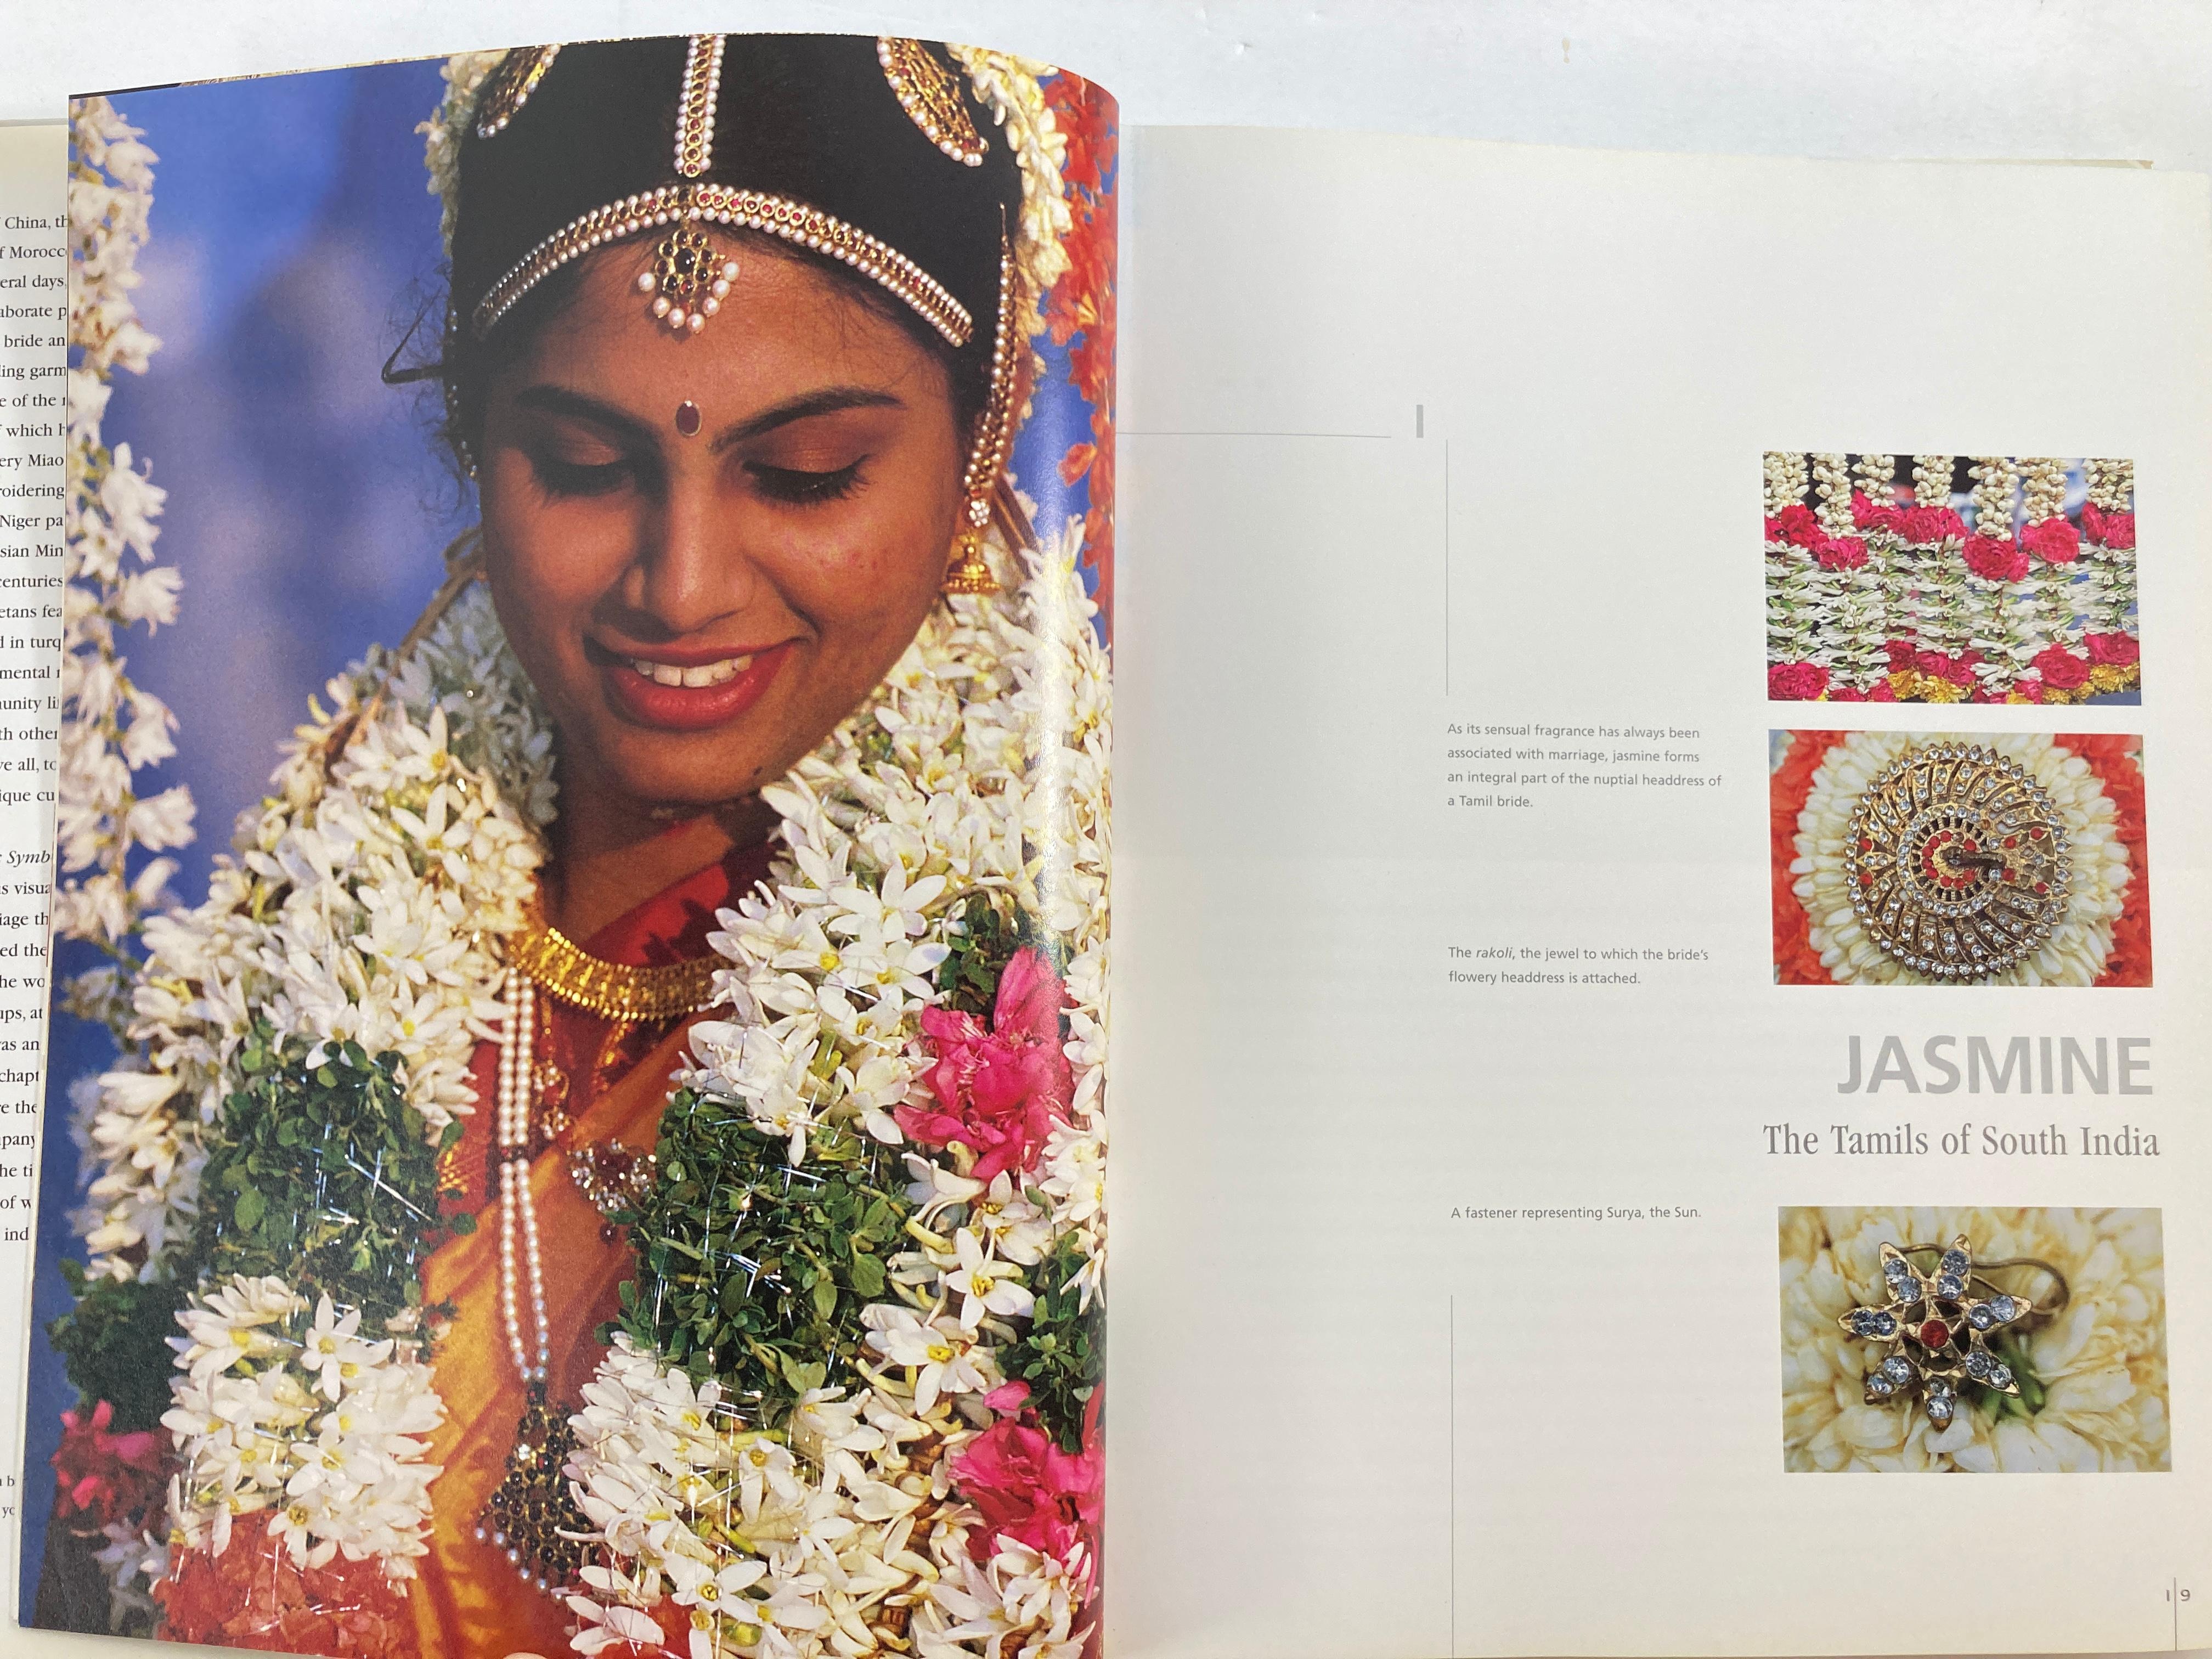 Paper Wedding Ceremonies Ethnic Symbols, Costume and Rituals by Gianni Baldezzoni